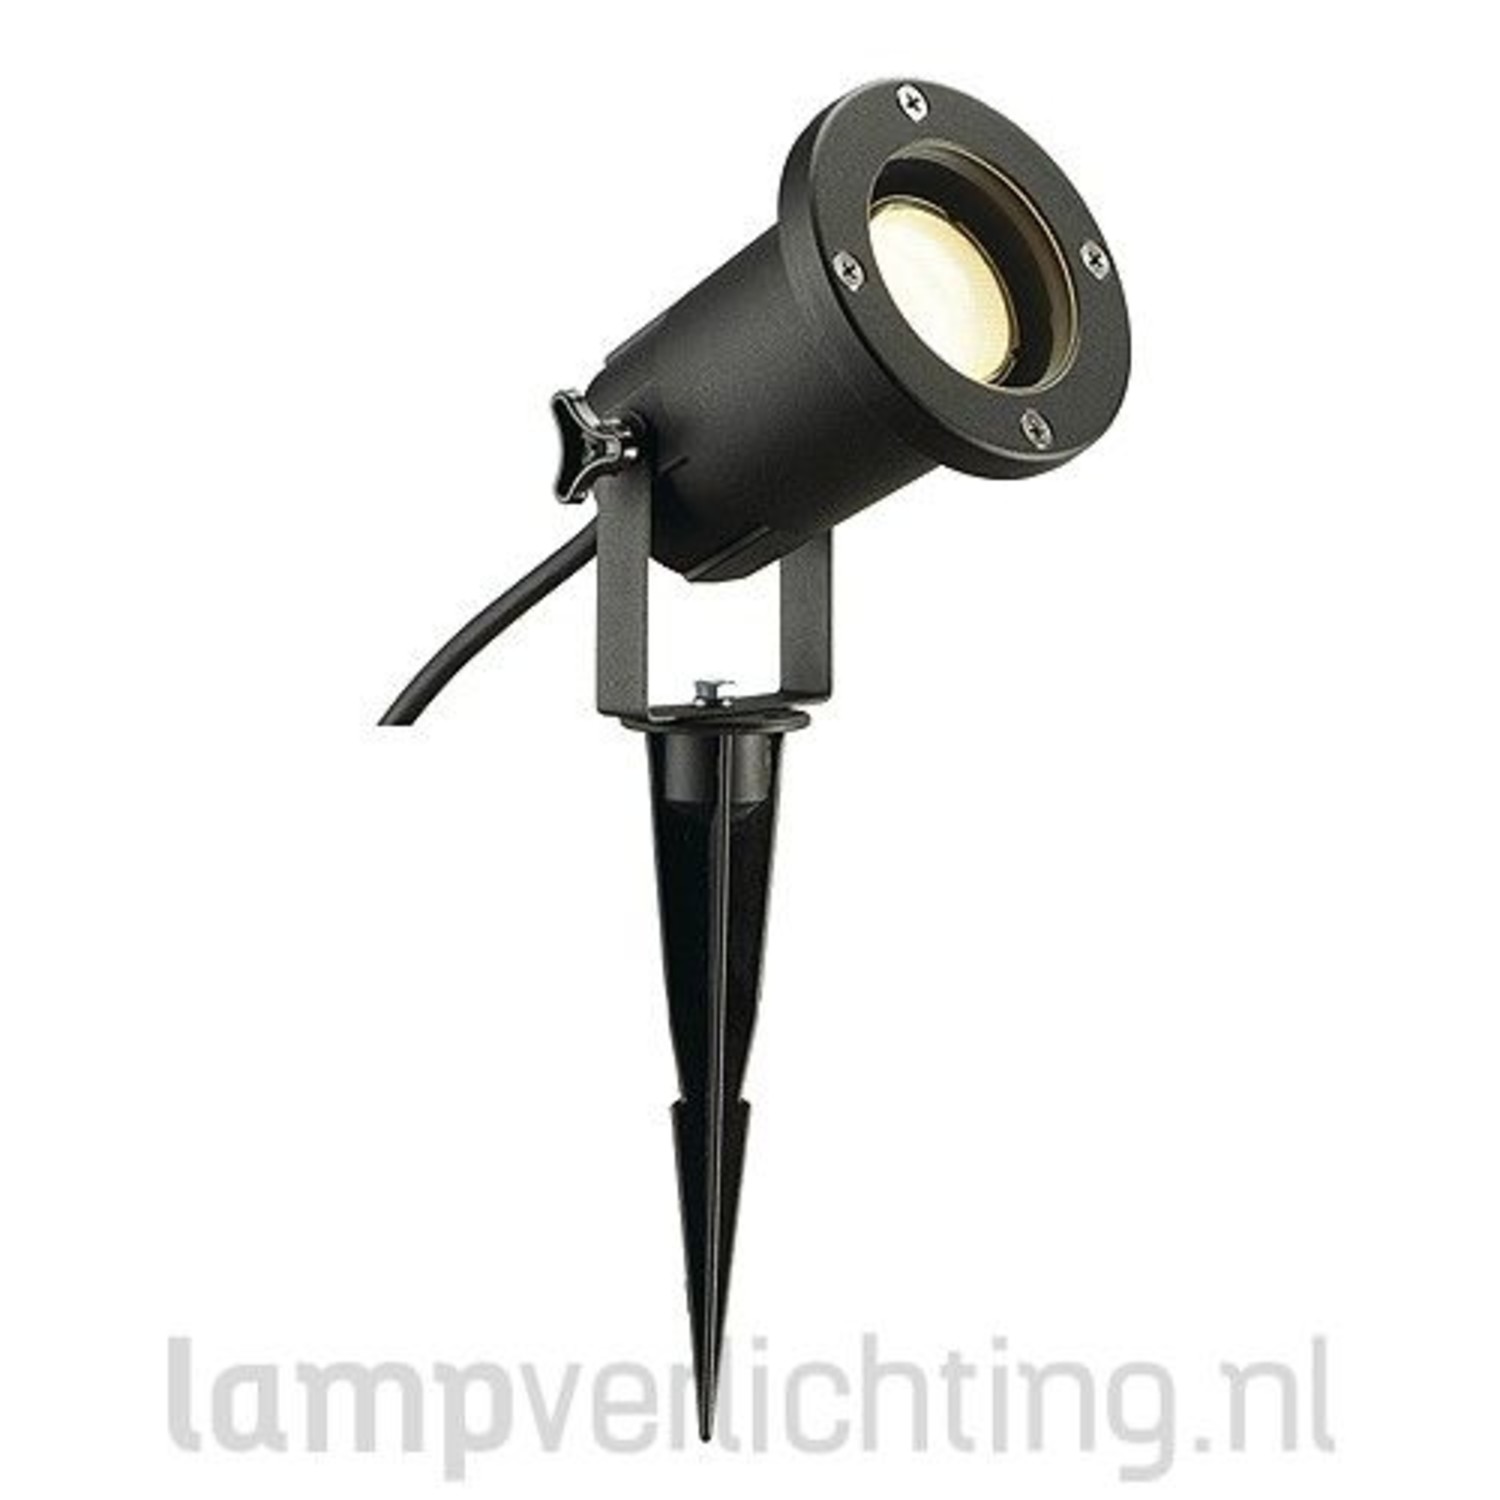 diameter gitaar Ideaal Tuinspot Spies GU10 230V - Zwart - Met spies, kabel en stekker - Tip -  LampVerlichting.nl